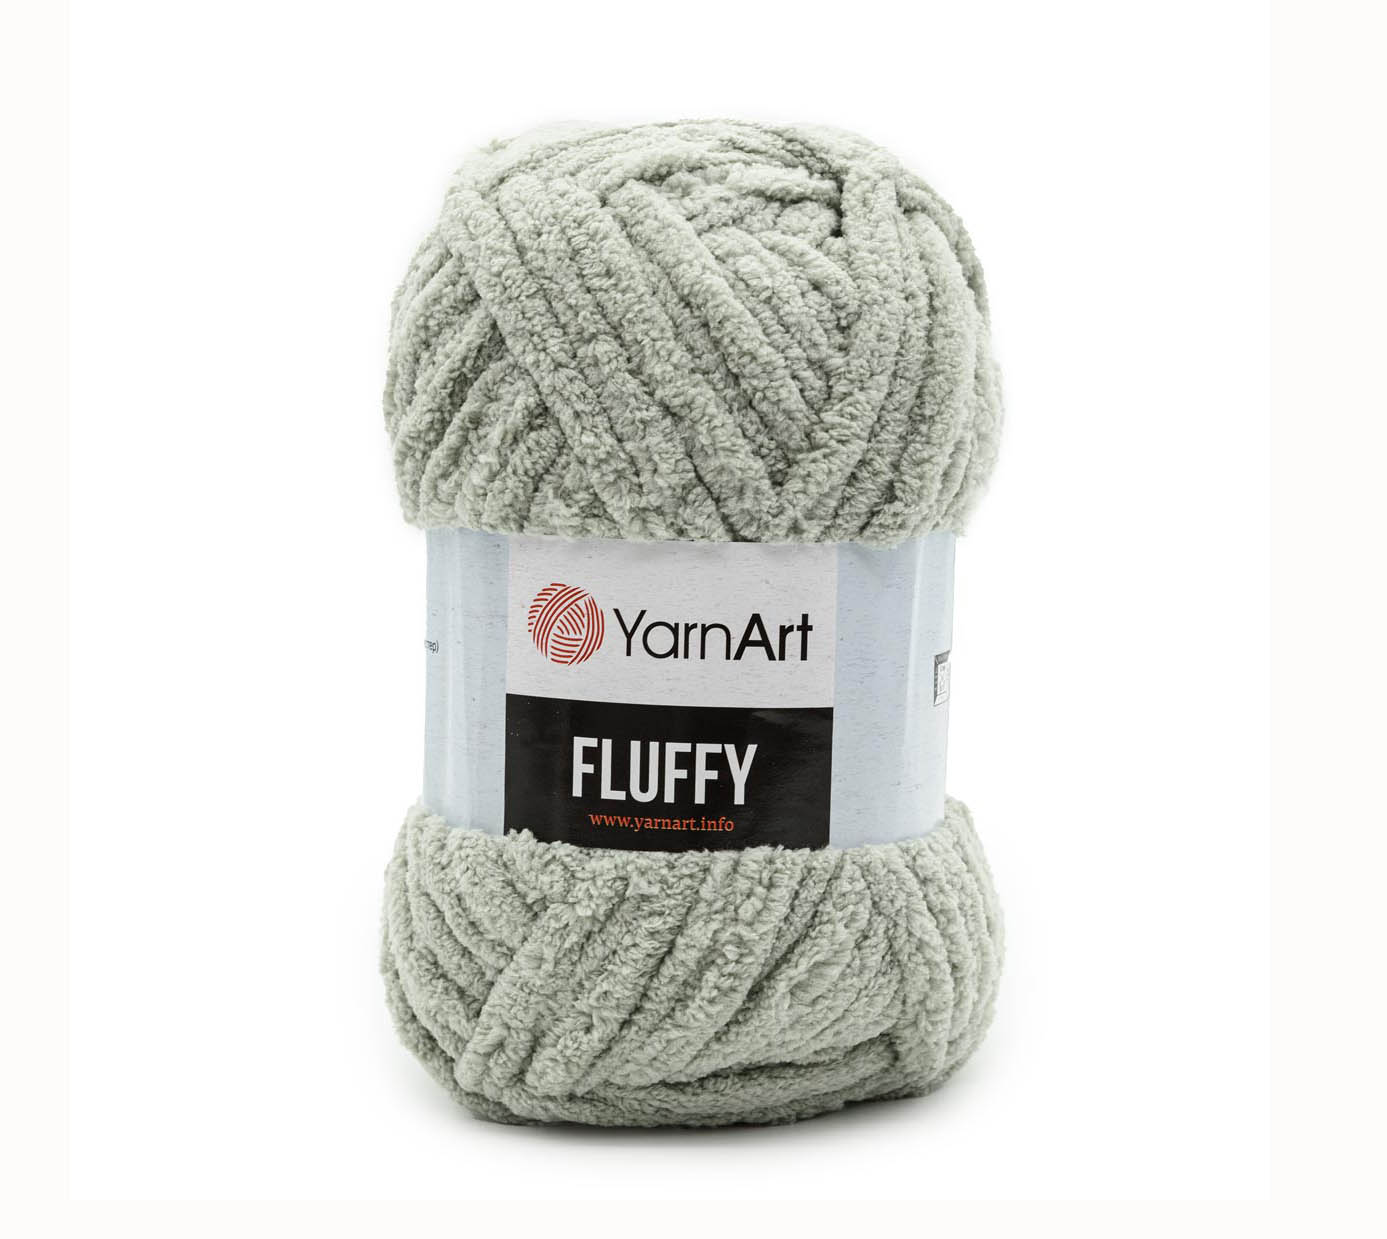 YarnArt Fluffy 725 